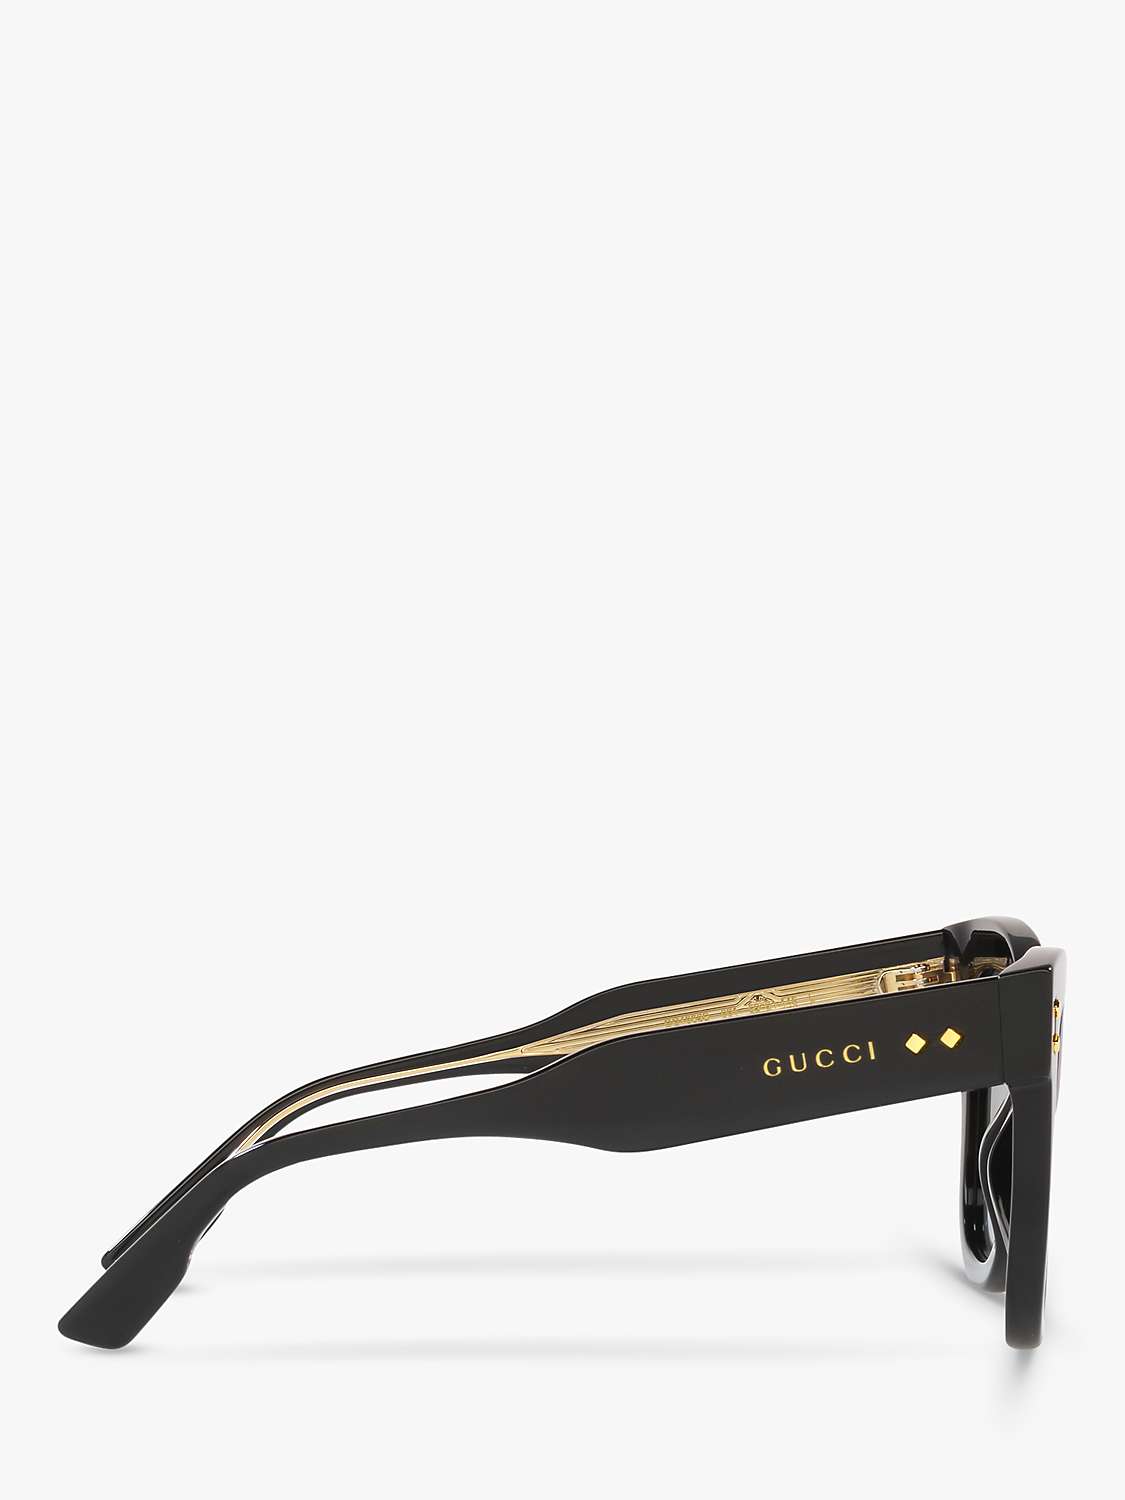 Buy Gucci GG1082S Women's Cat's Eye Sunglasses Online at johnlewis.com